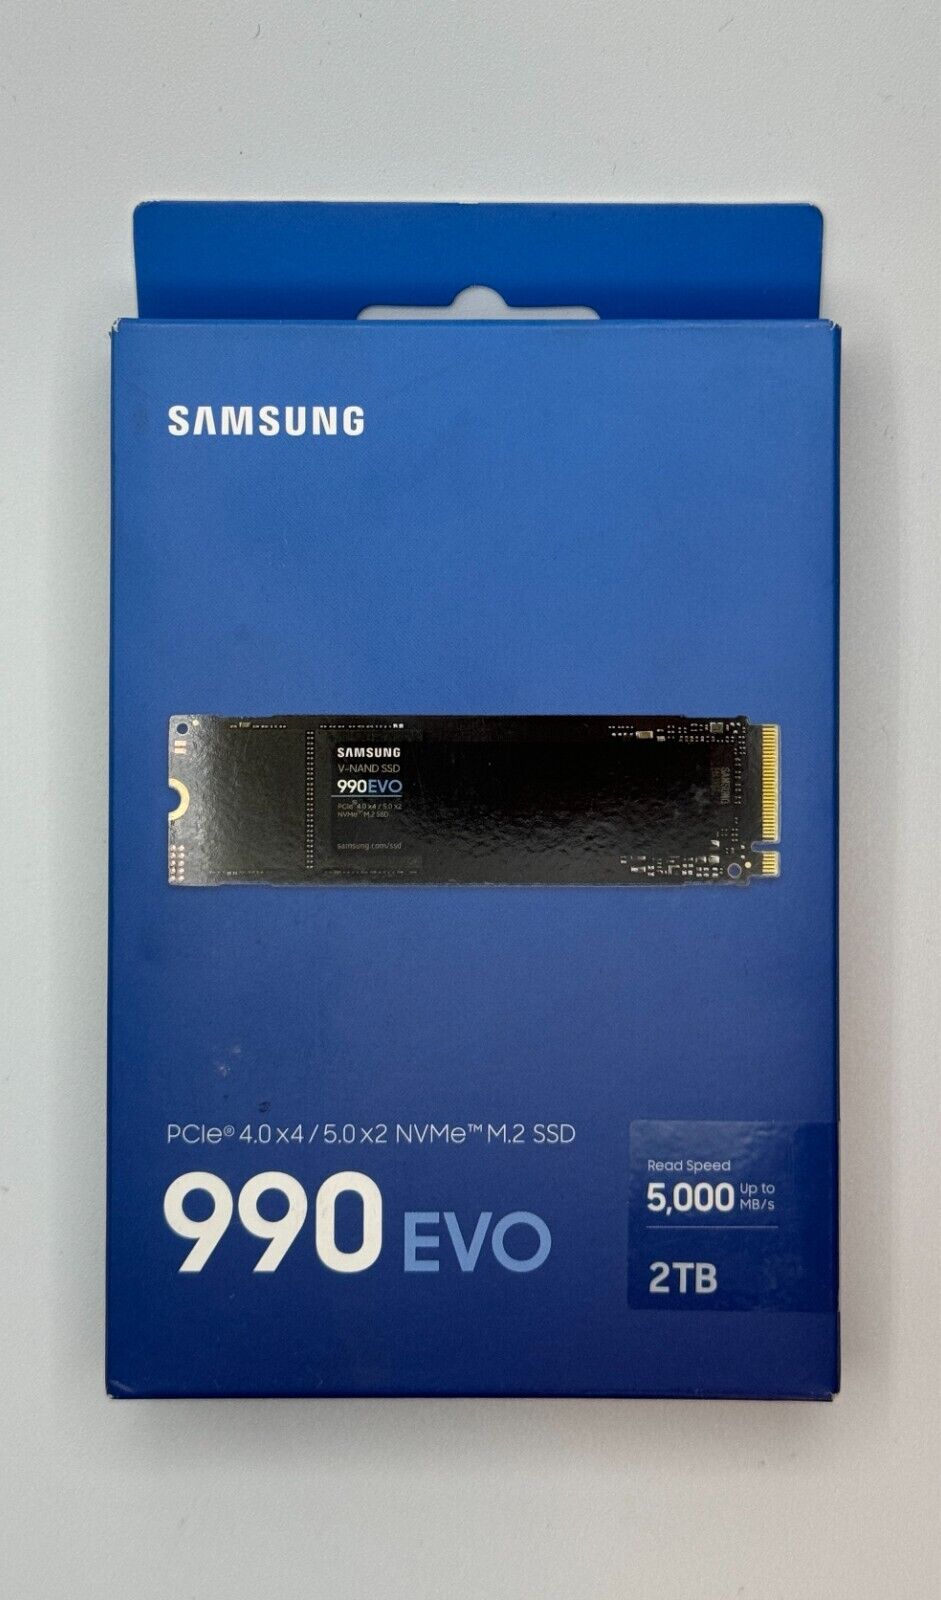 Samsung - 990 EVO SSD 2TB Internal SSD PCIe Gen 4x4 | Gen 5x2 M.2 2280